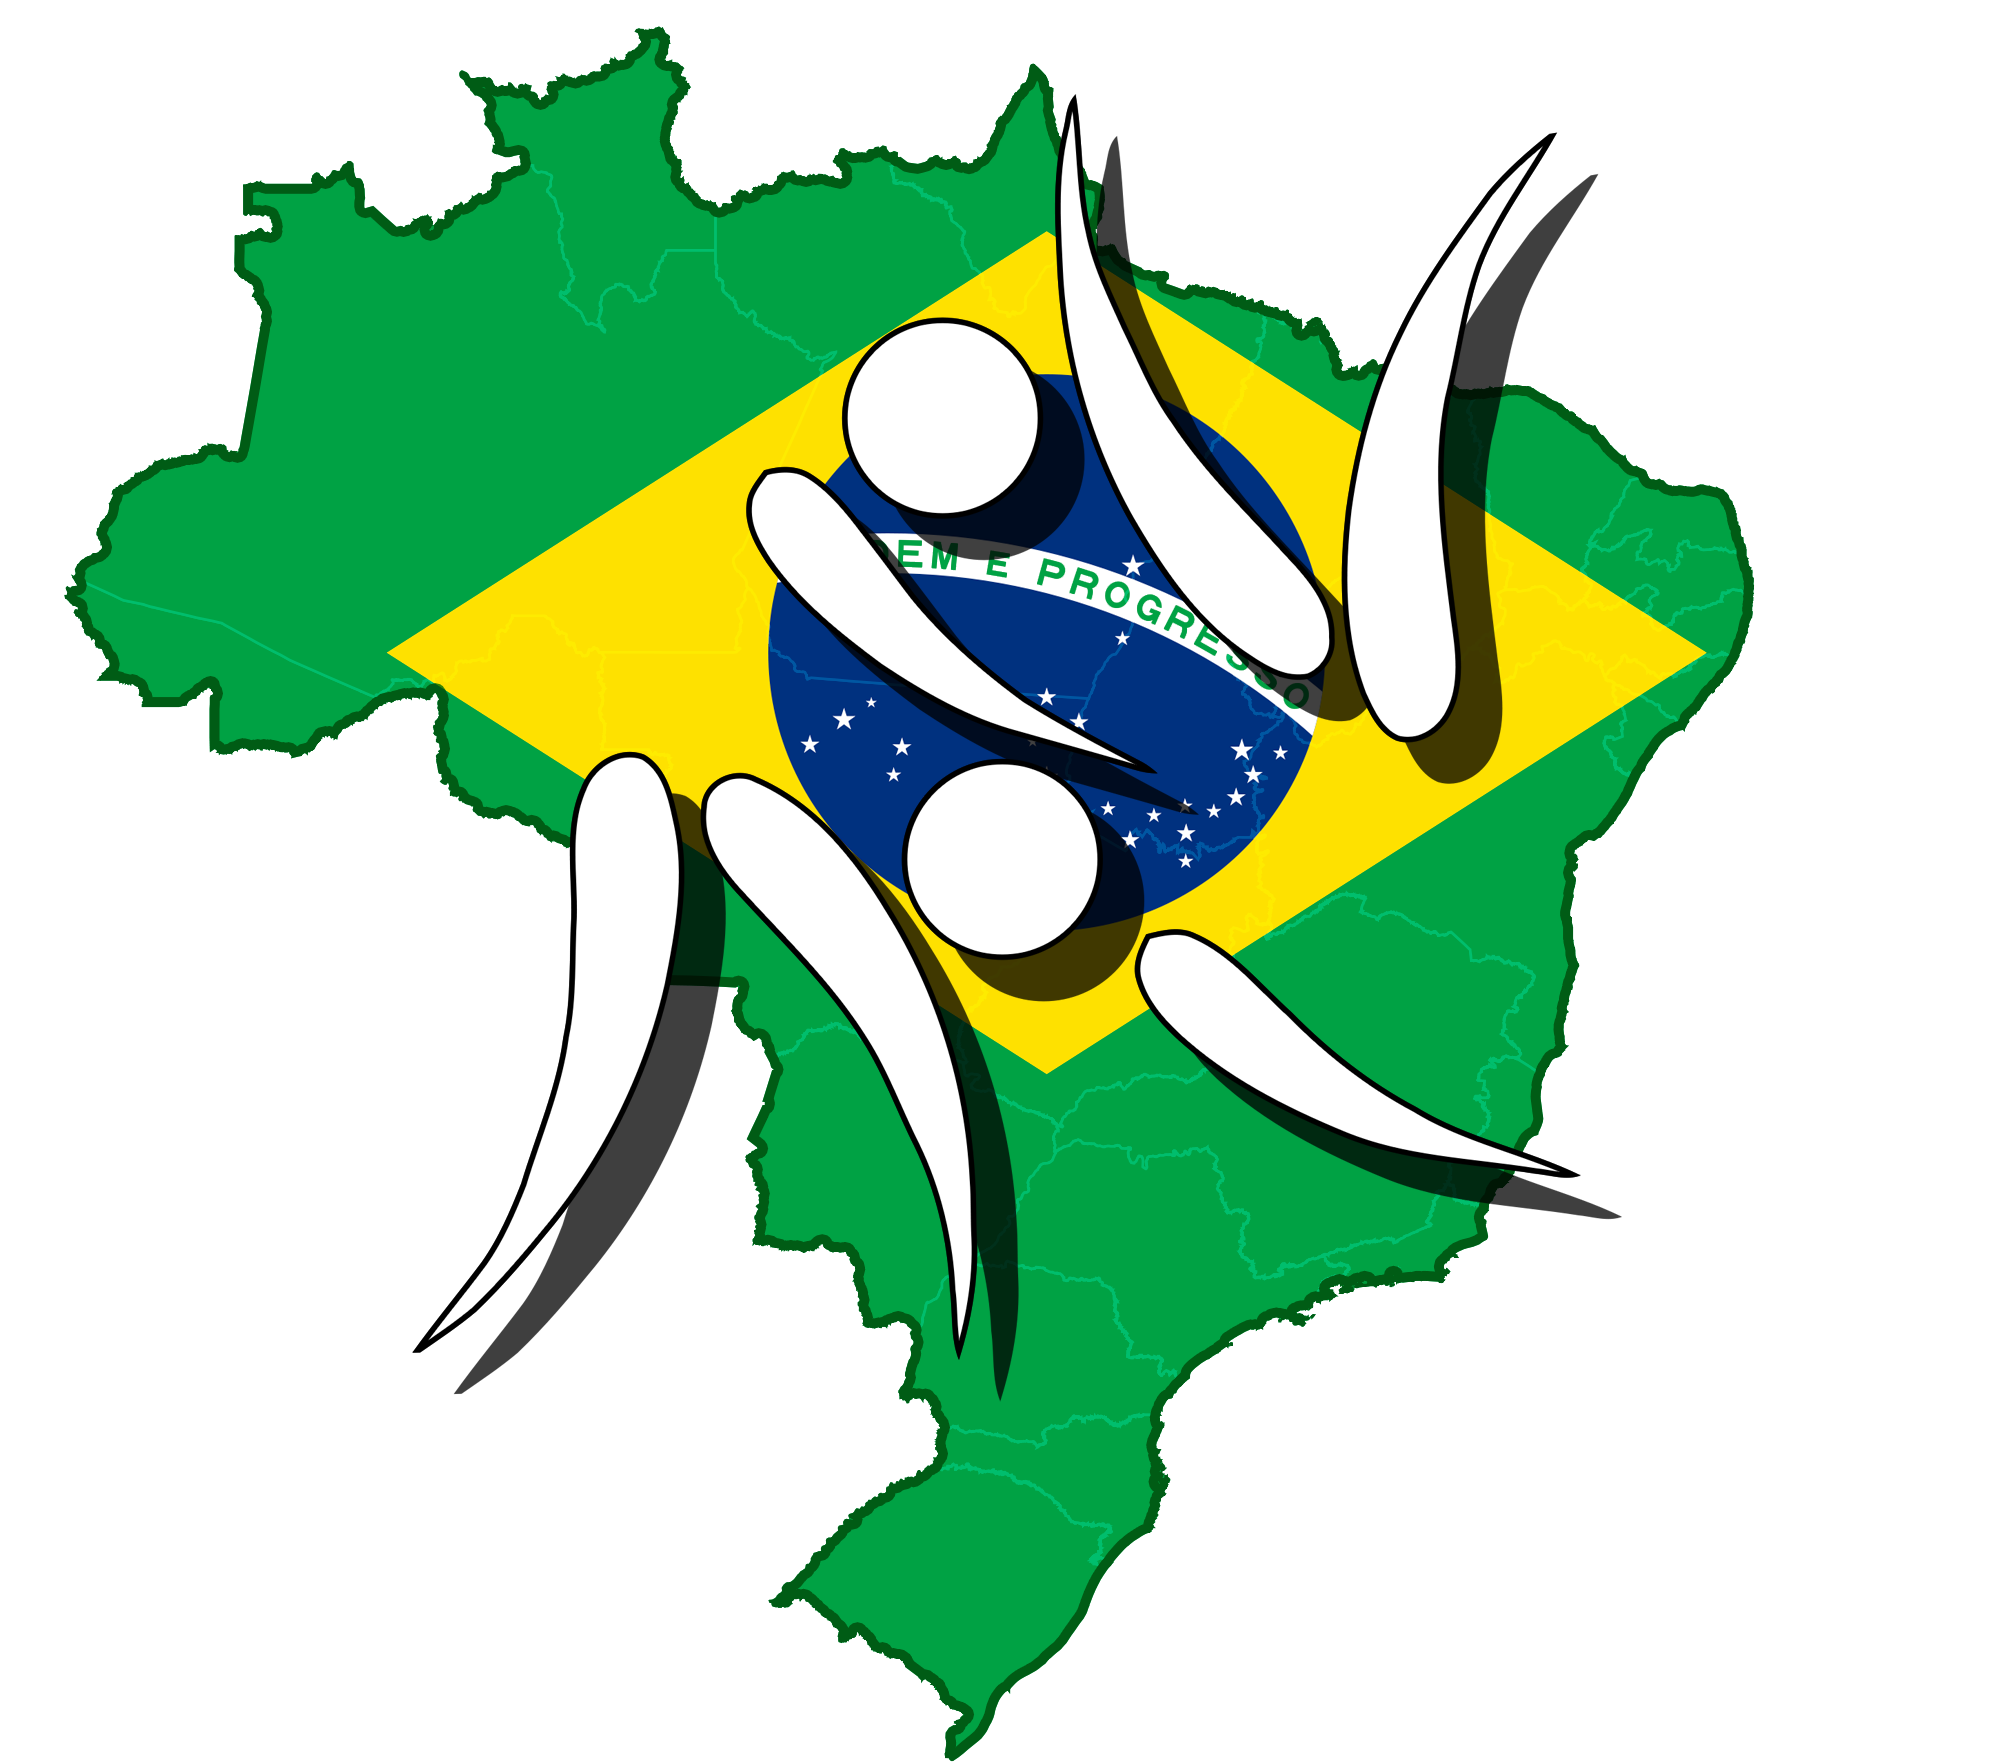 128x128 px, Brazil Icon 216x2